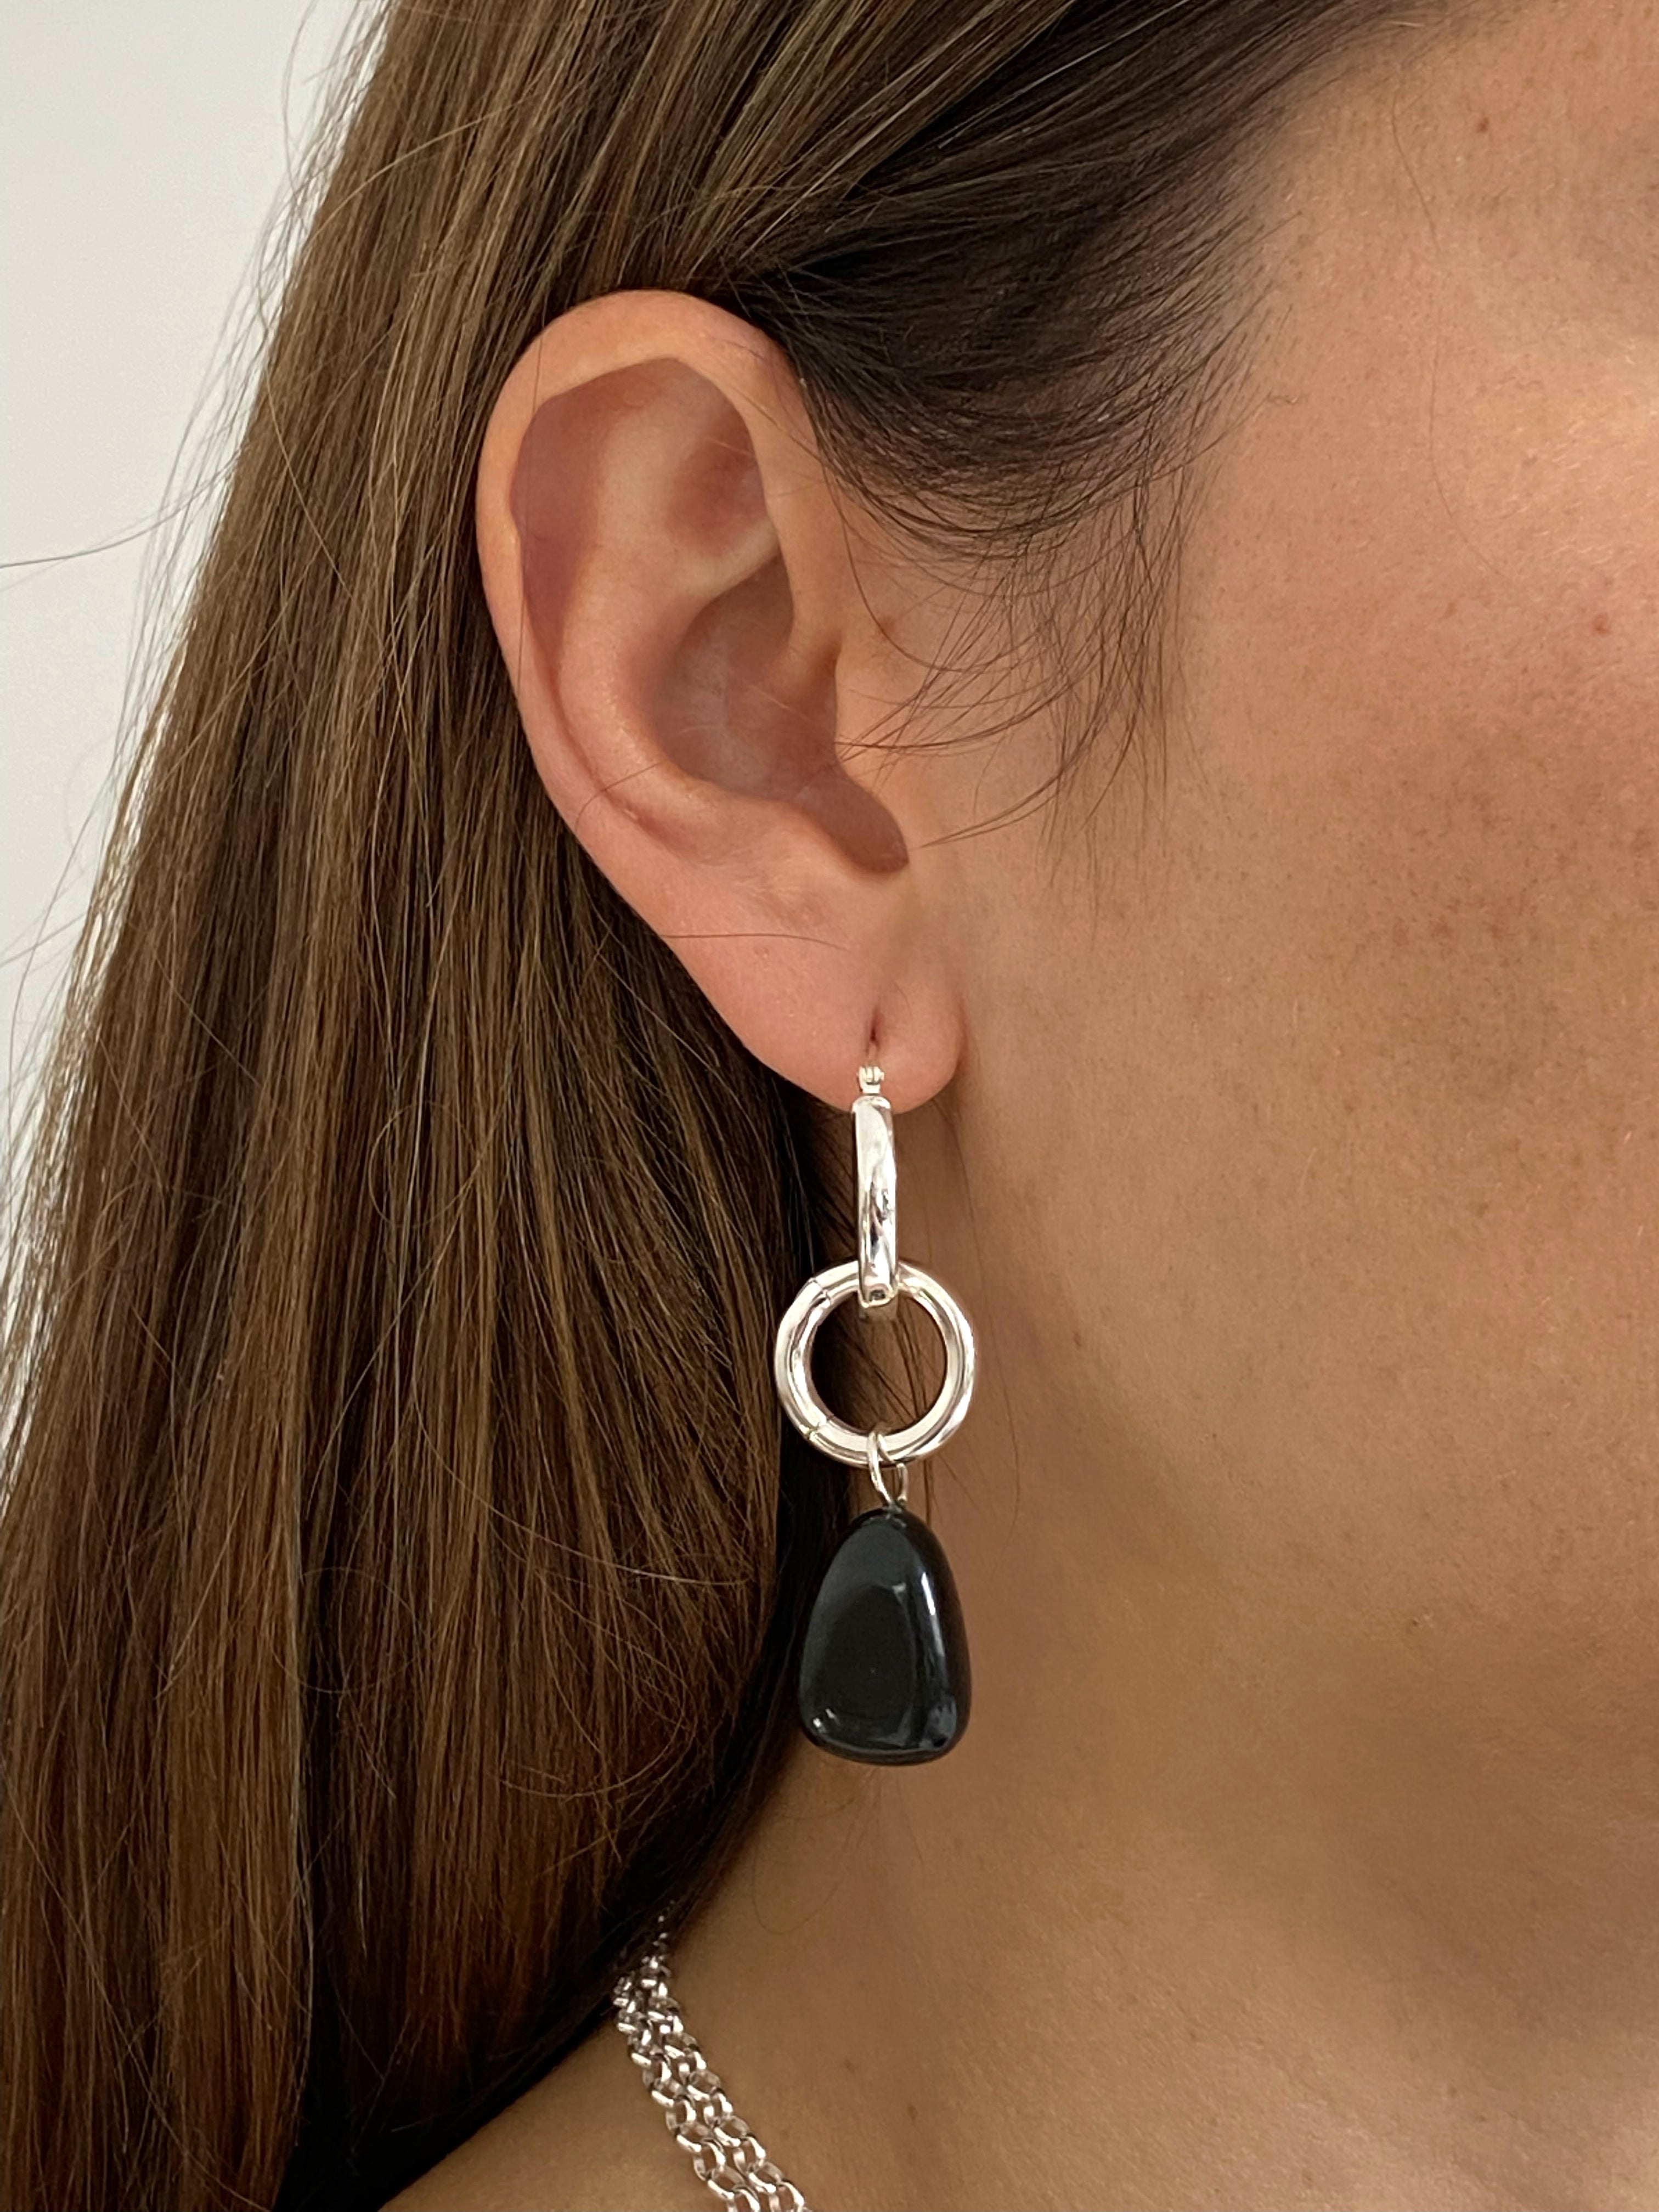 llayers minimal Silver black obsidian stone hoops earrings Made in Brooklyn New York